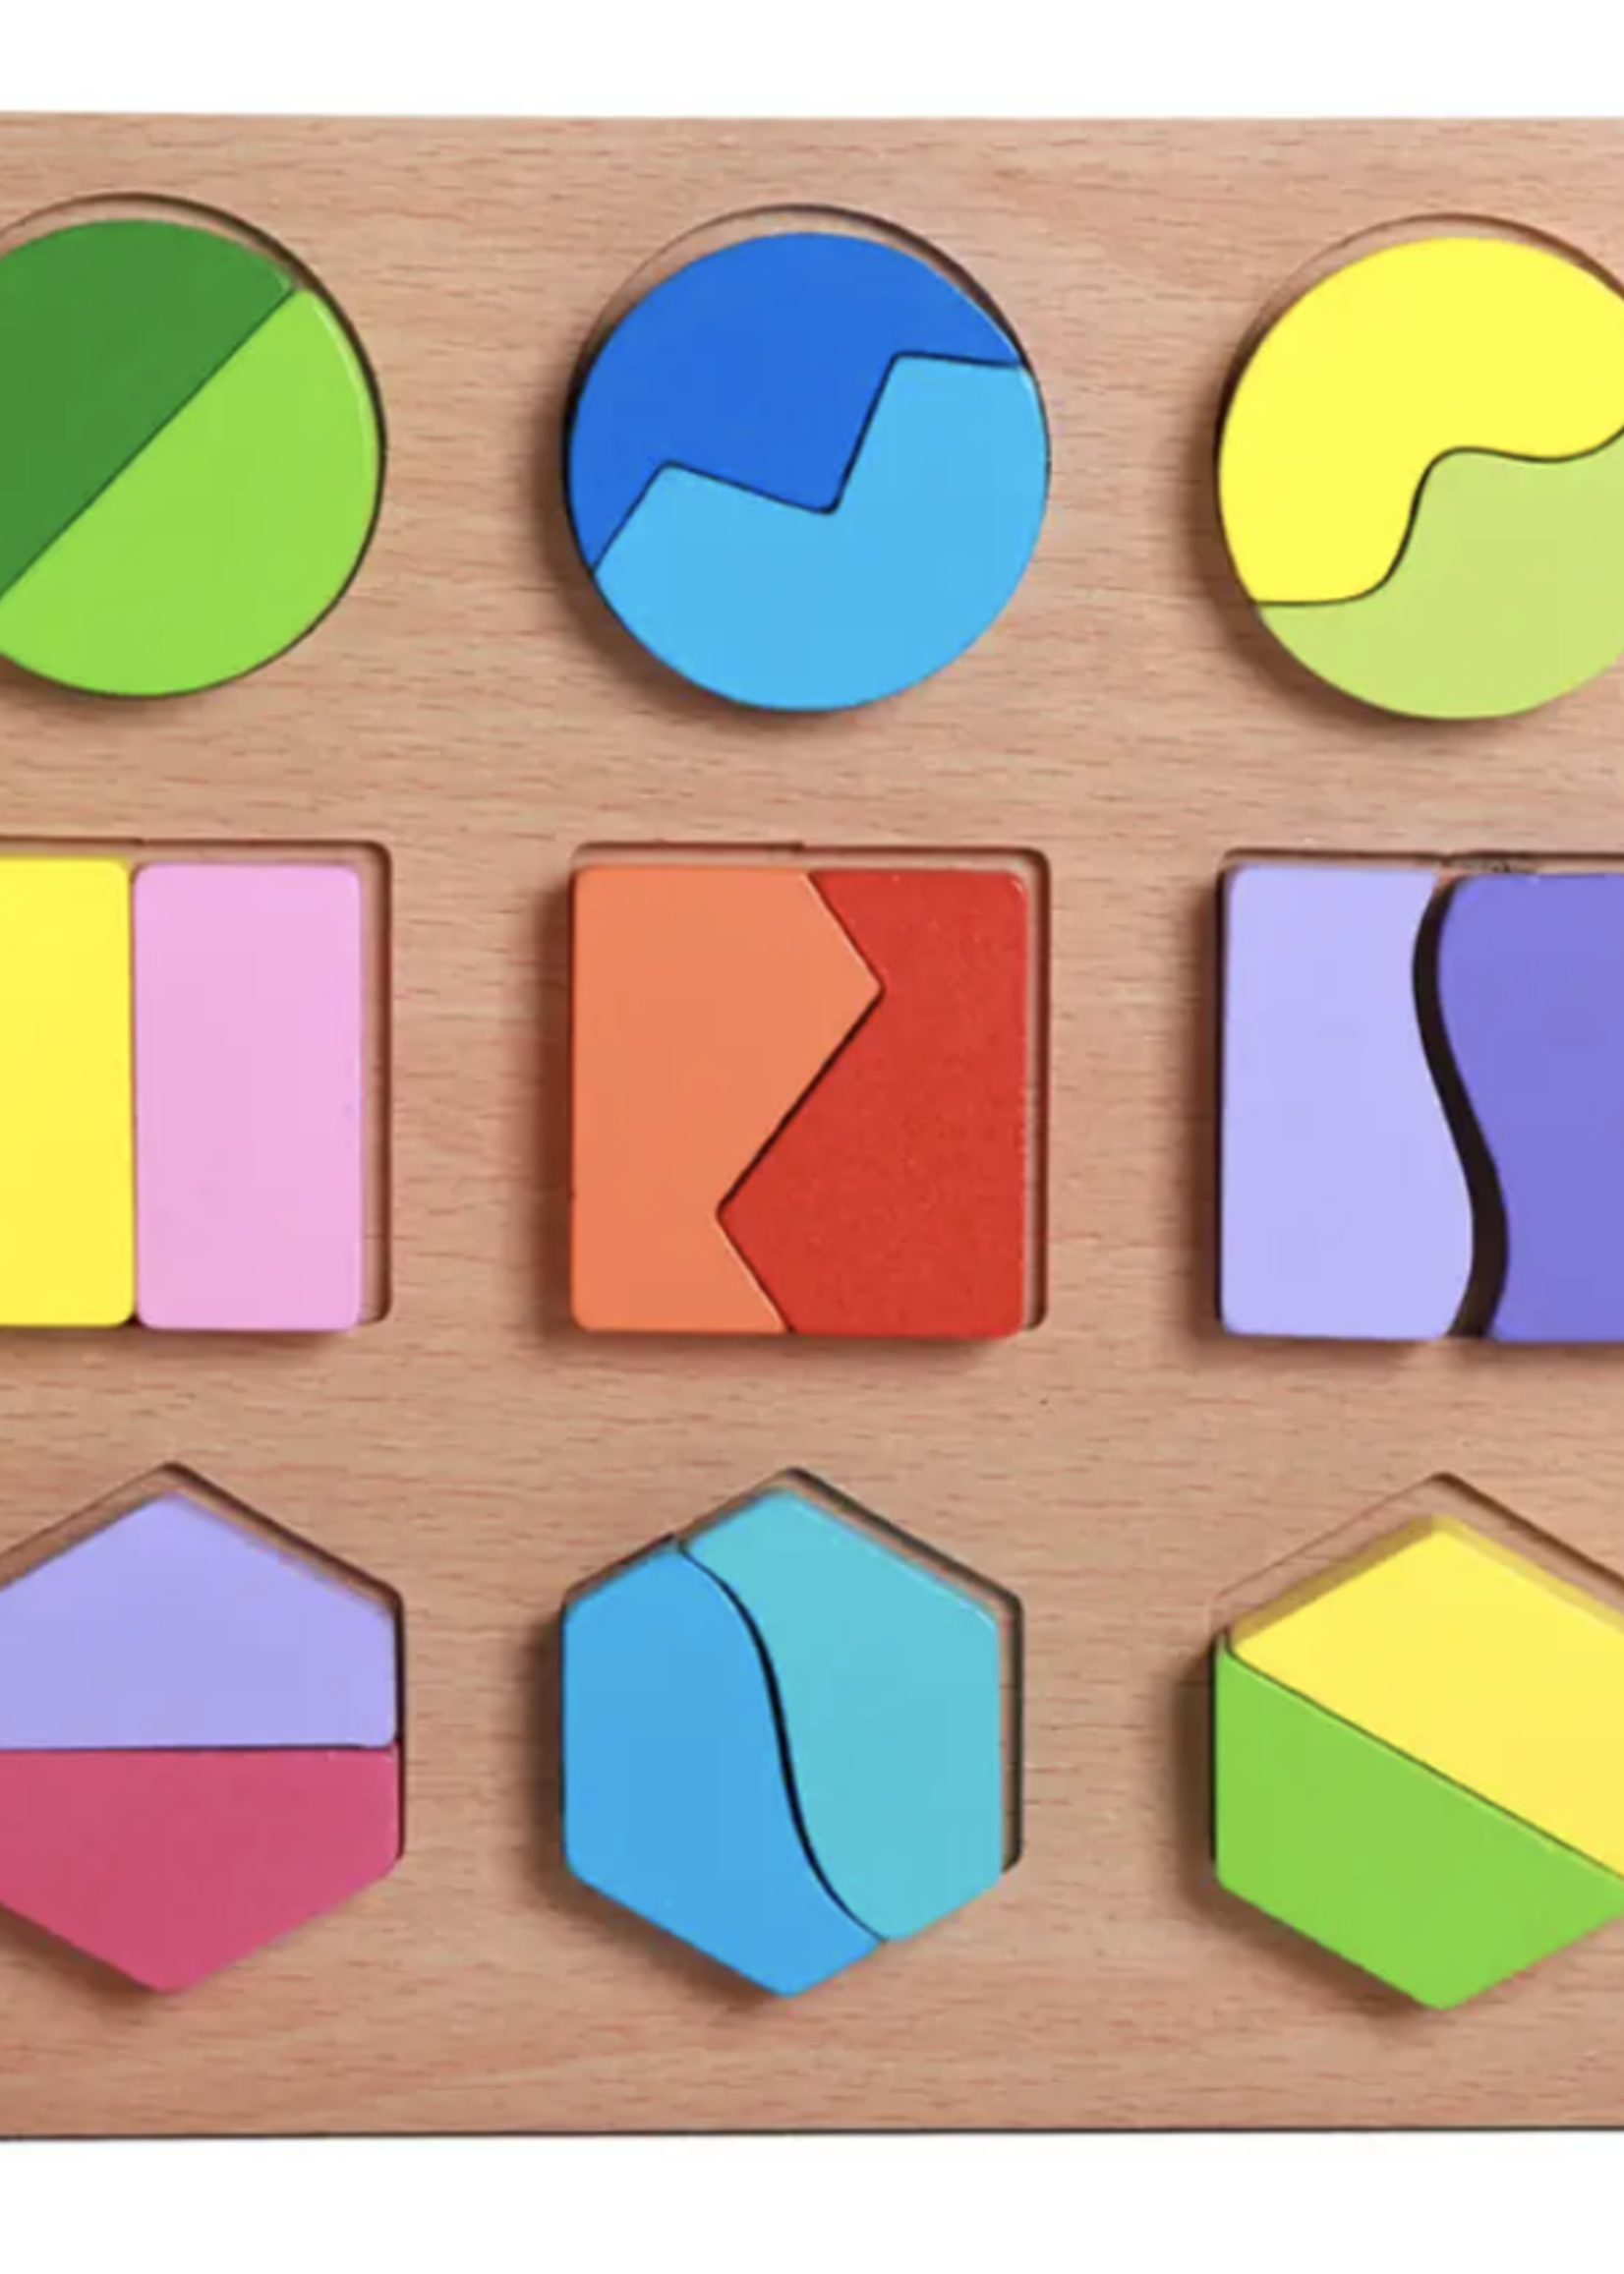 Shape Puzzle Matching Board